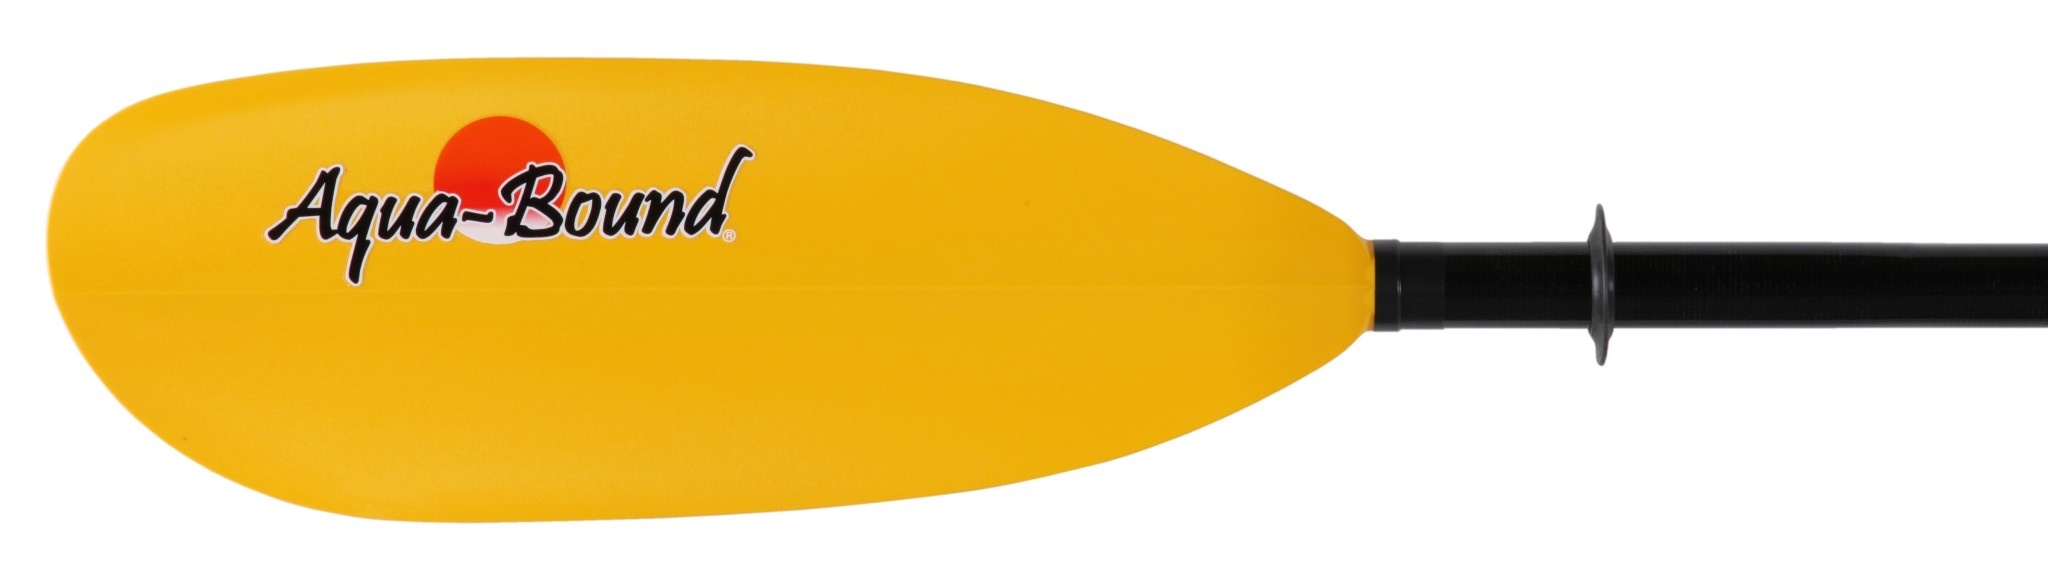 Aqua Bound StingRay Fiberglass 2-Piece Kayak Paddle